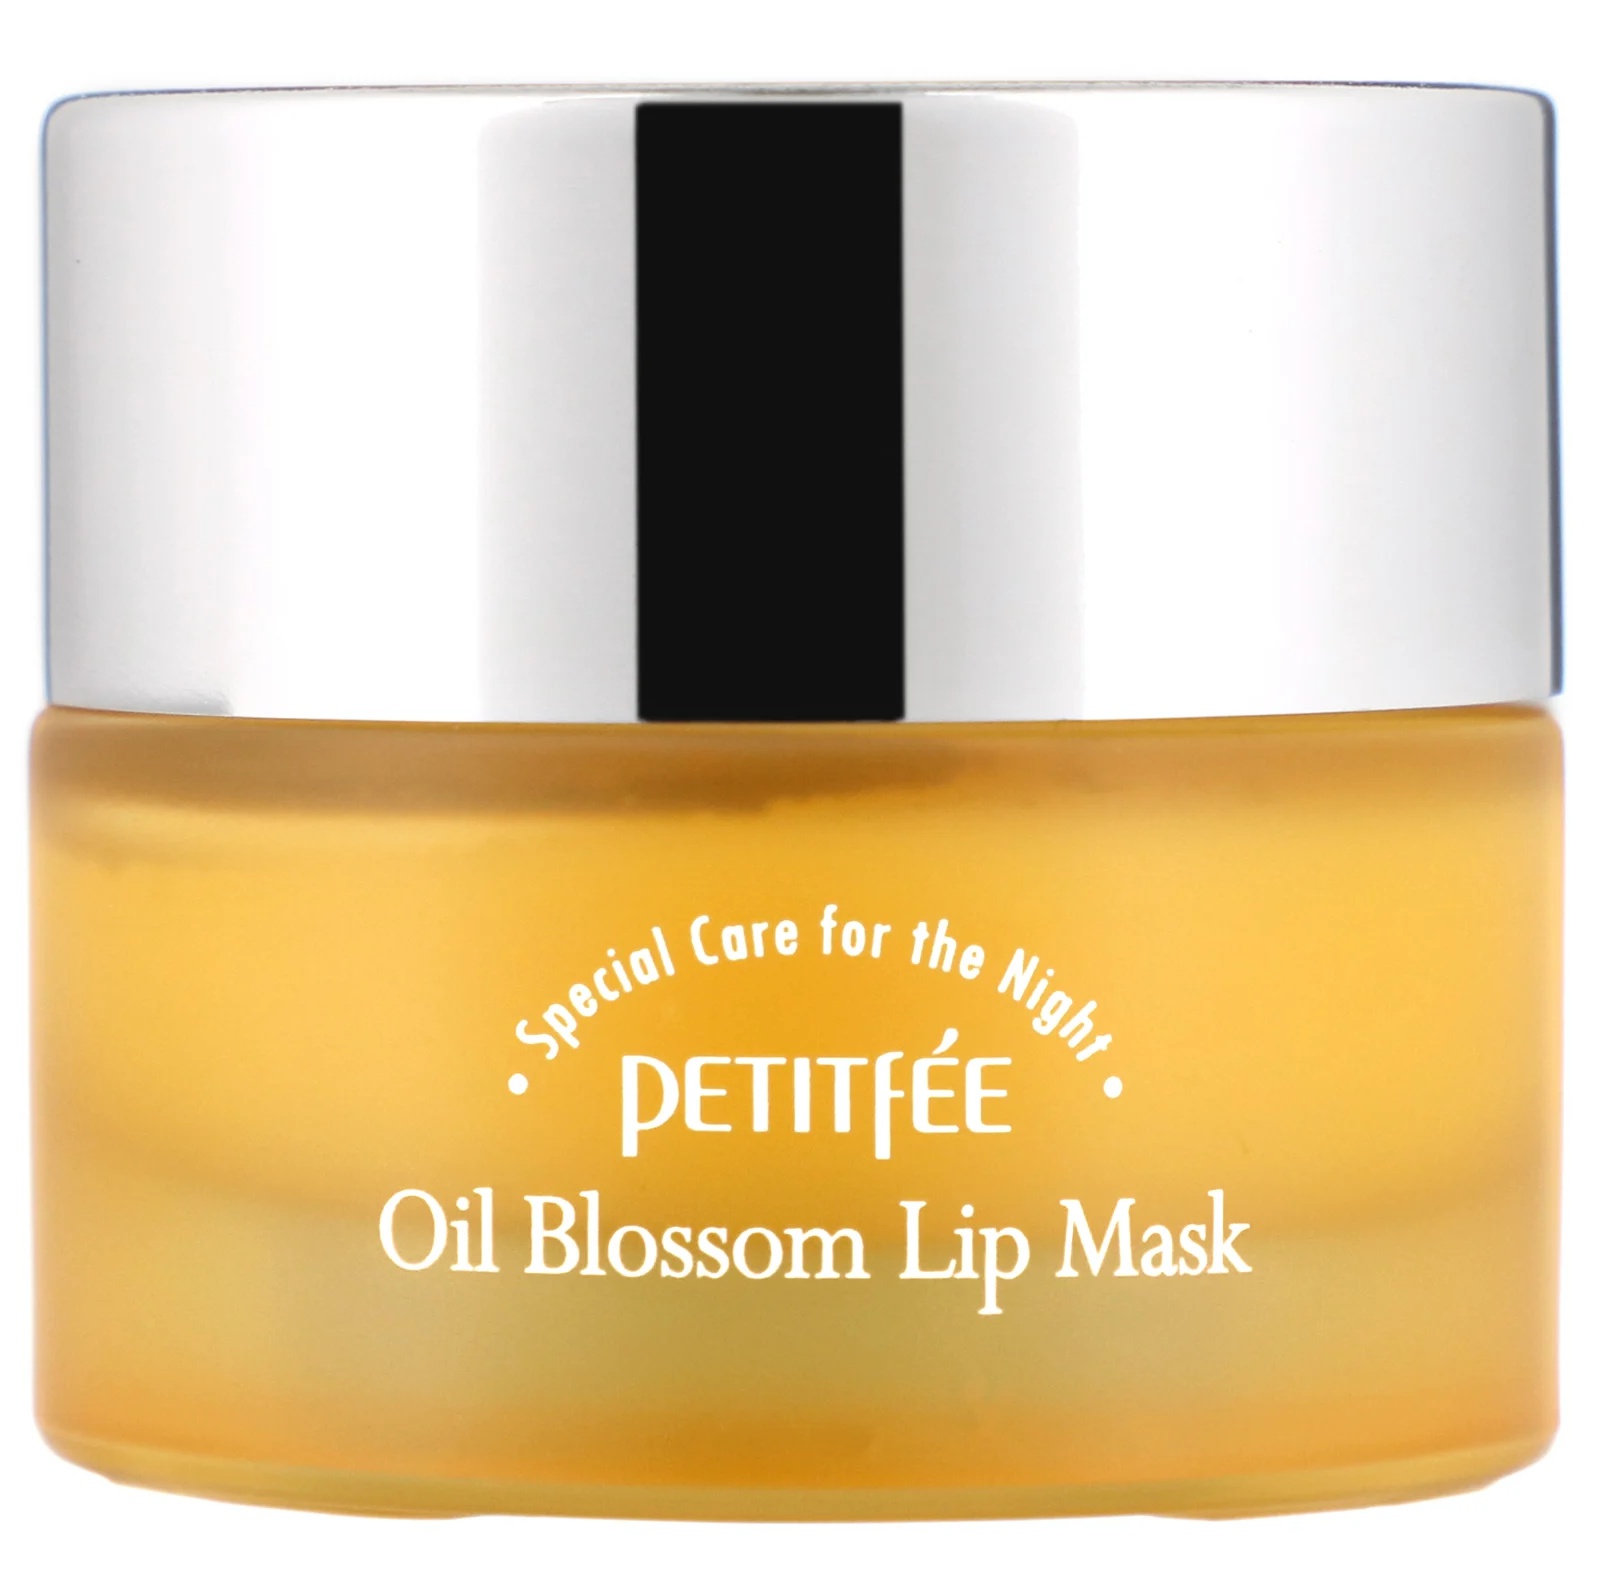 Petitfee Oil Blossom Lip Mask, Night Care, Sea Buckthorn Oil